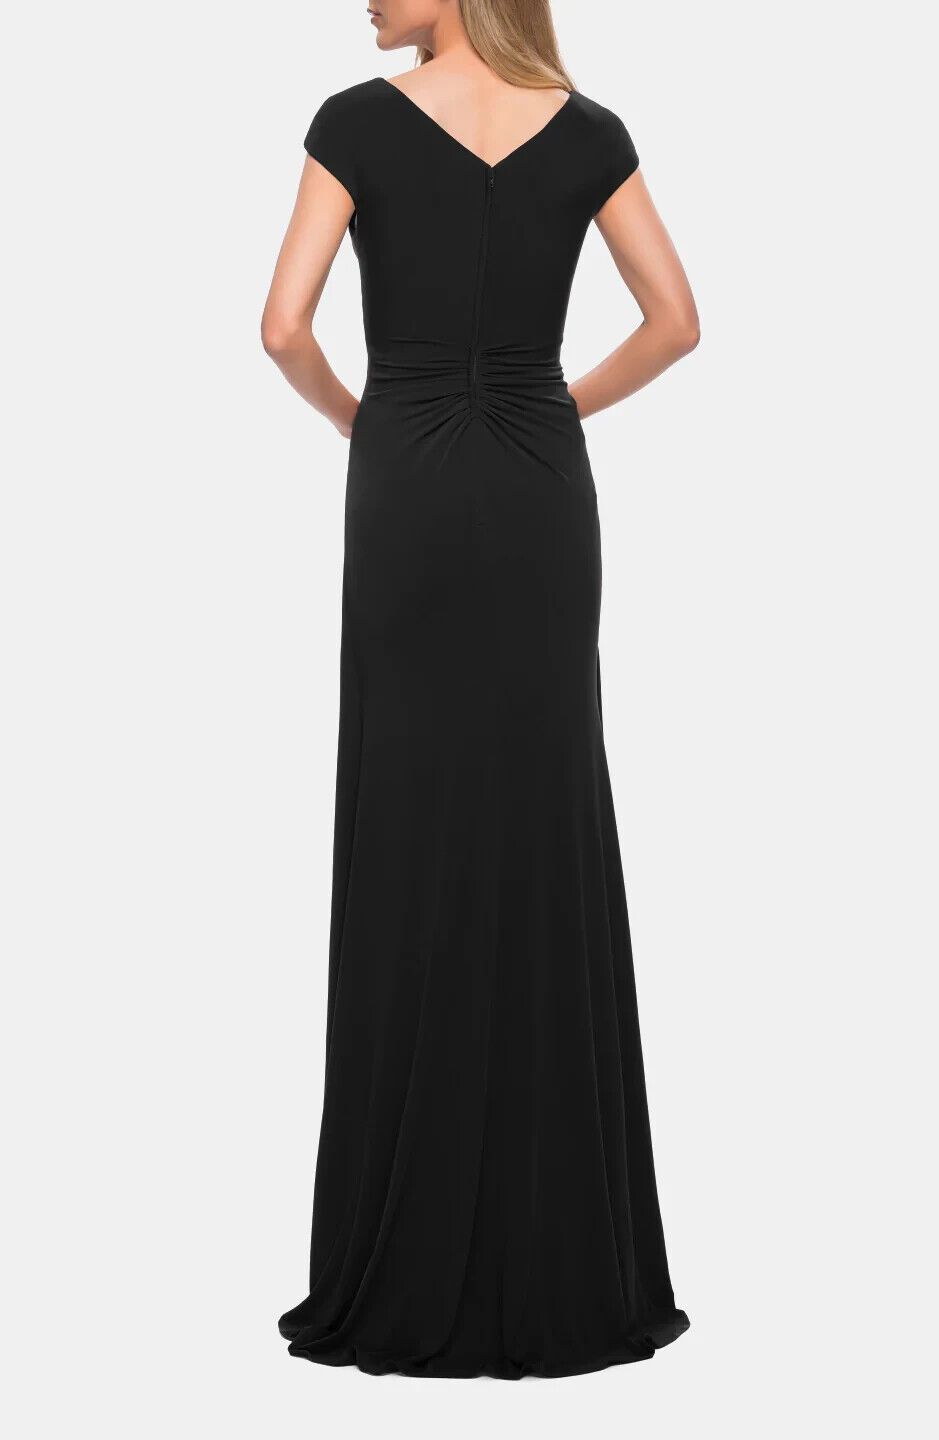 La Femme Size 8 Prom Off The Shoulder Black A-line Dress on Queenly